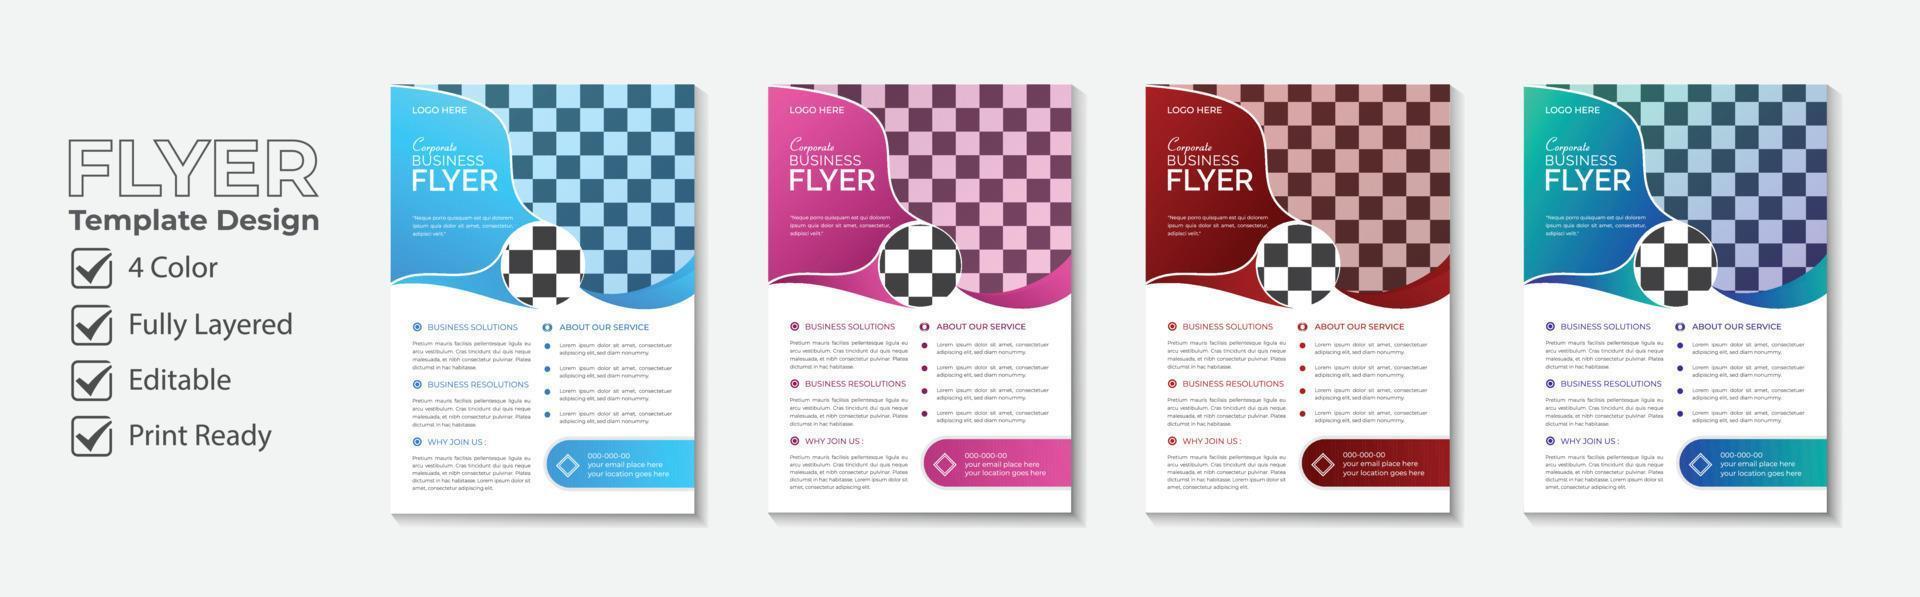 Corporate unique business flyer template design vector